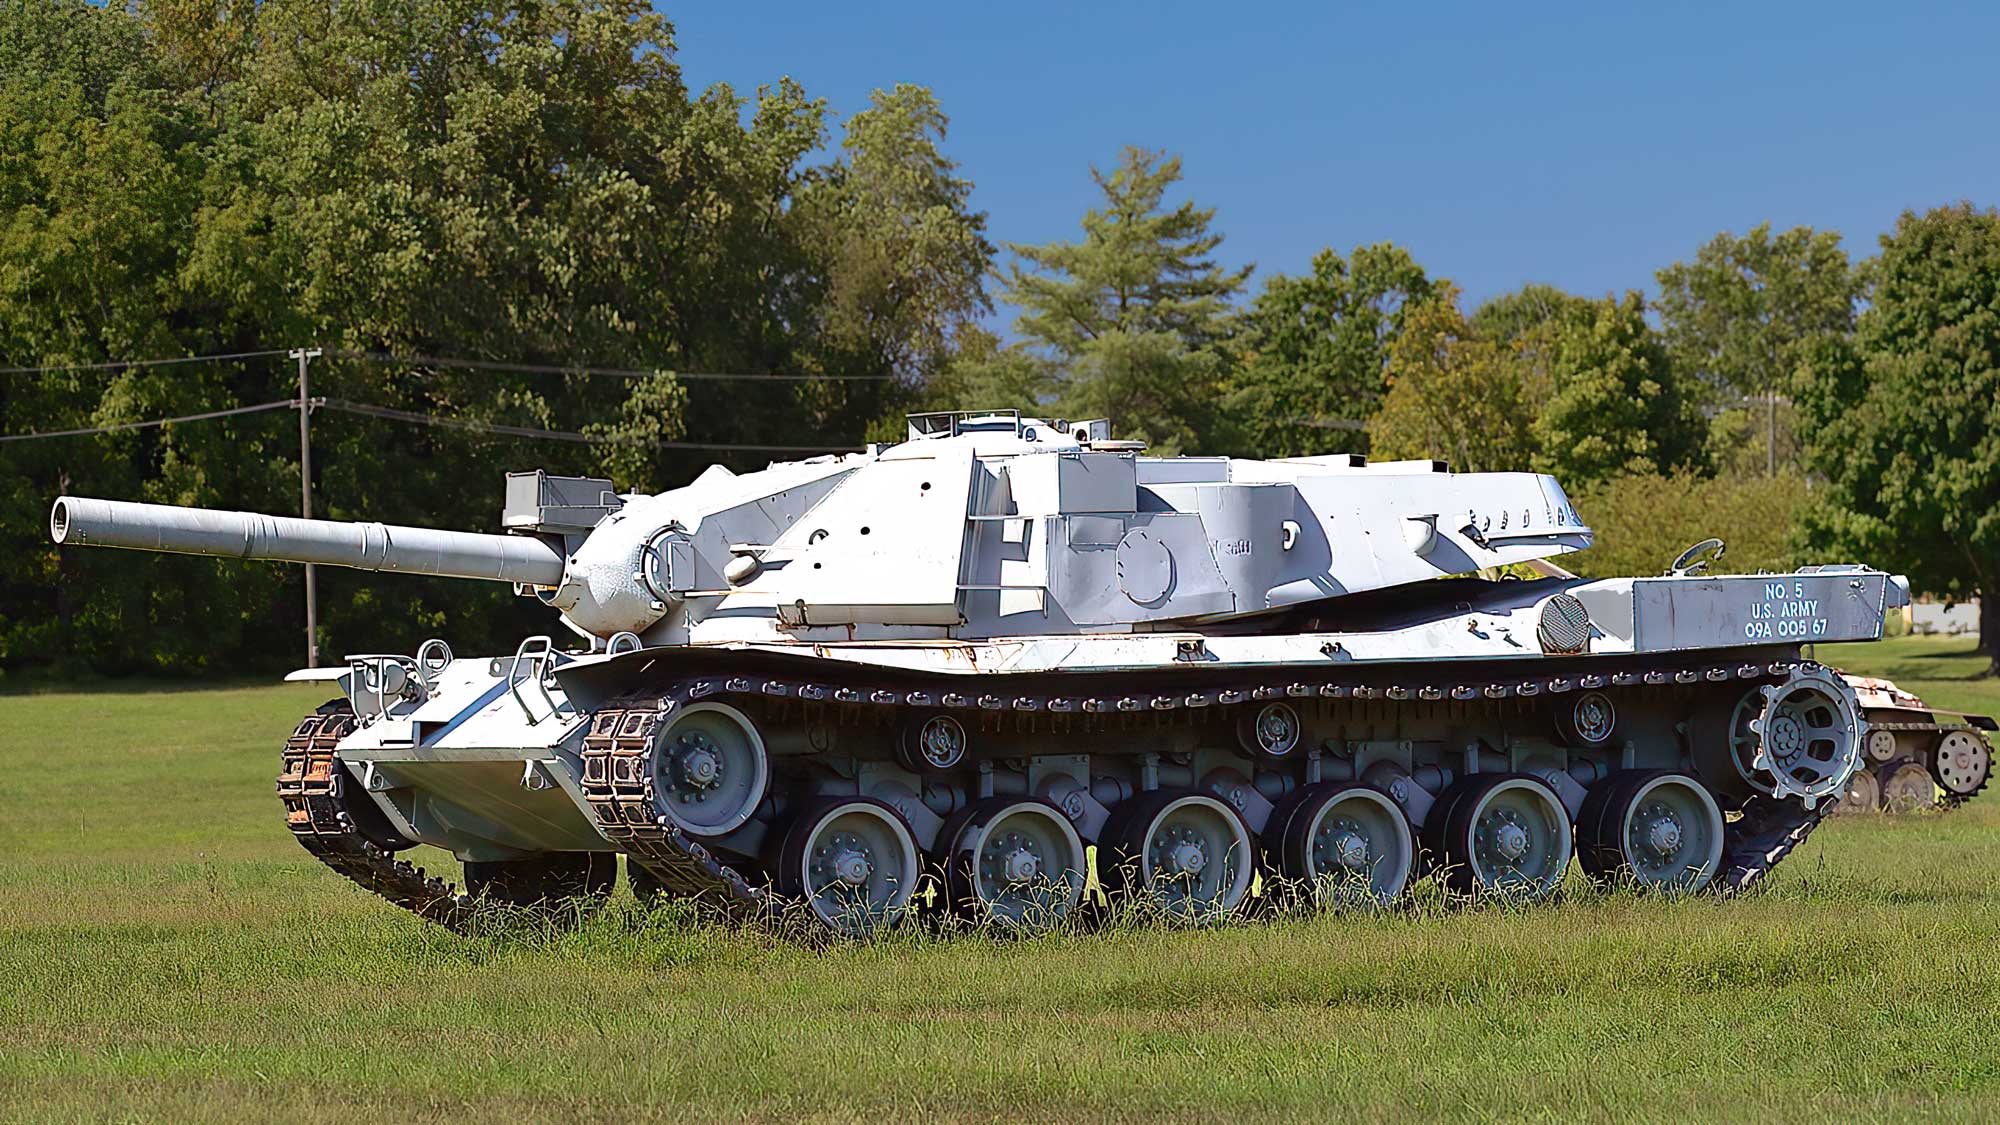 La historia del MBT-70: el tanque al que dos ejércitos dijeron “no”